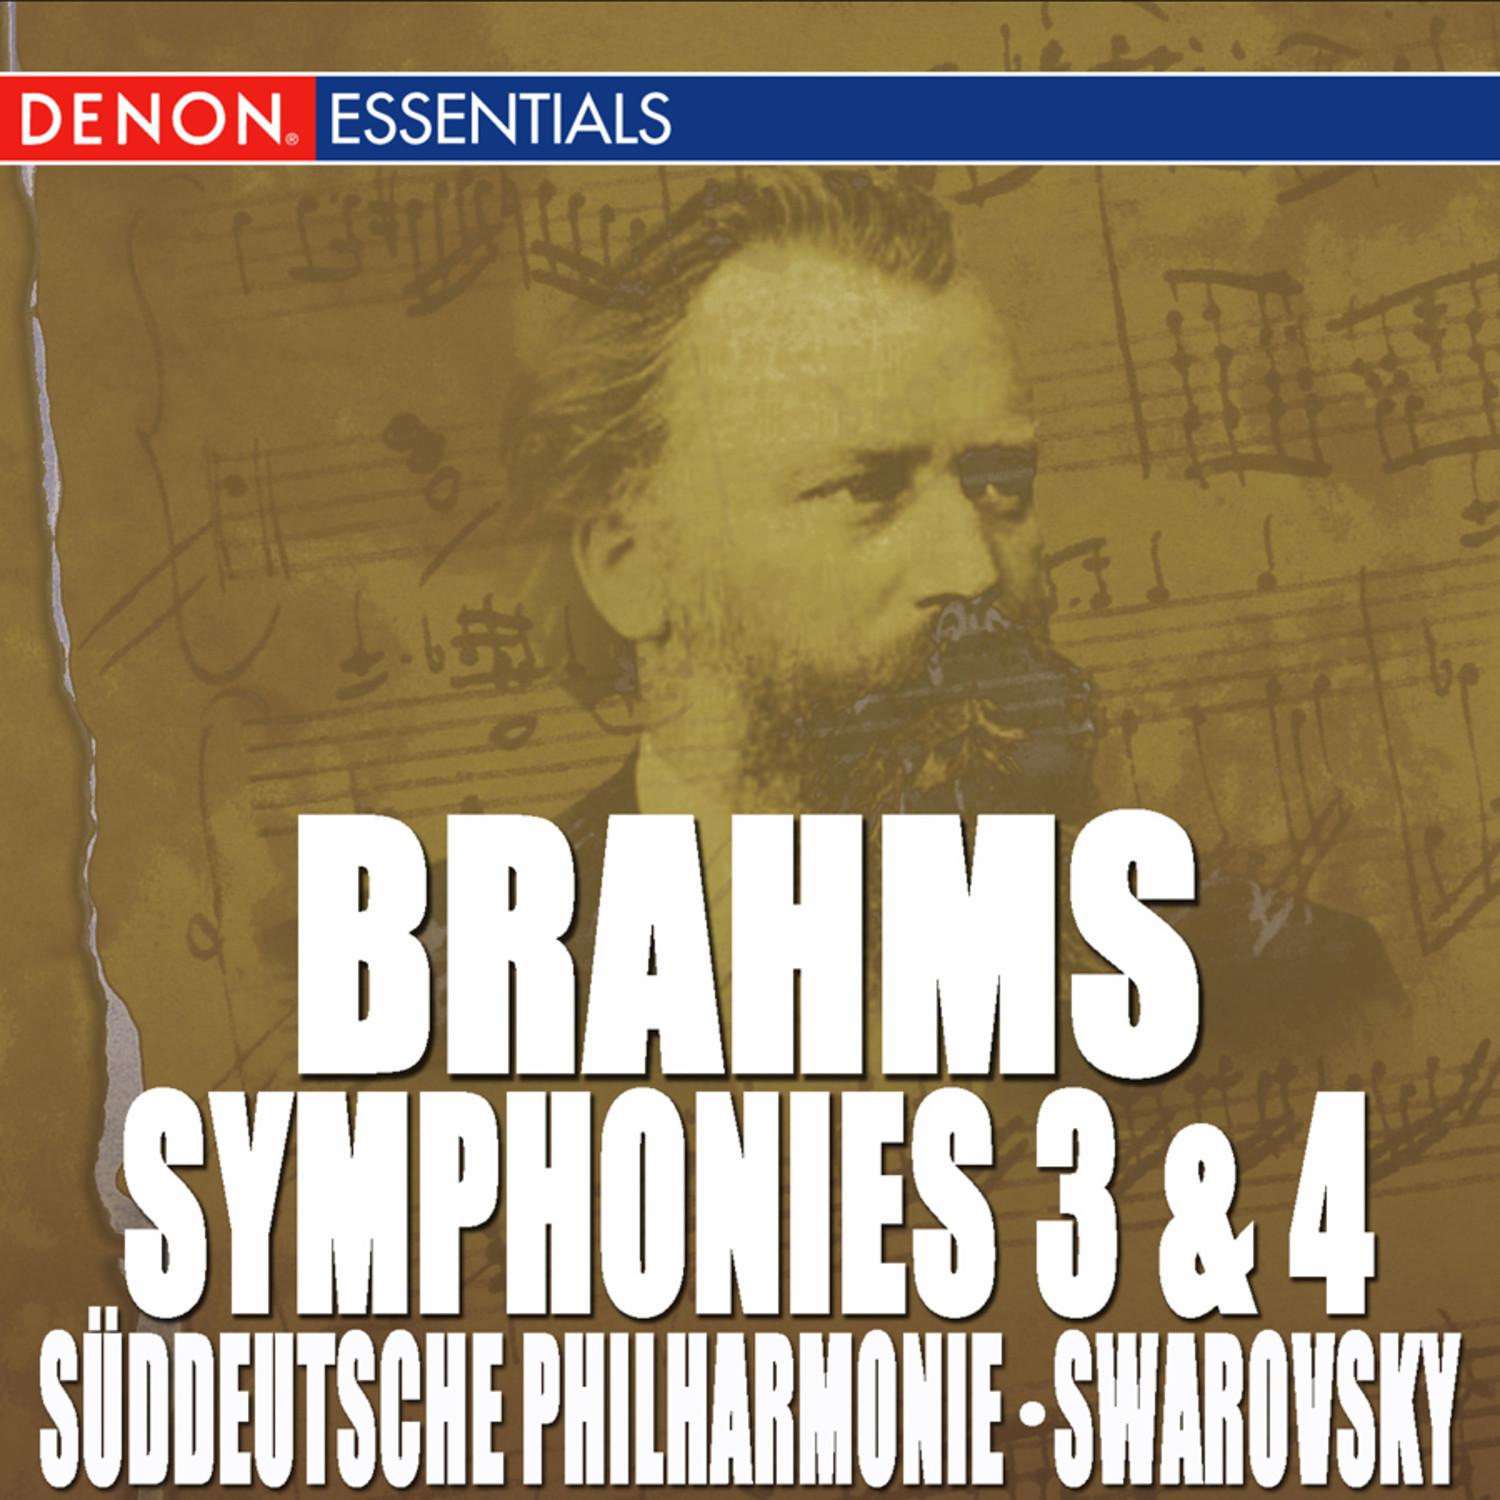 Brahms: Symphony Nos. 3 & 4